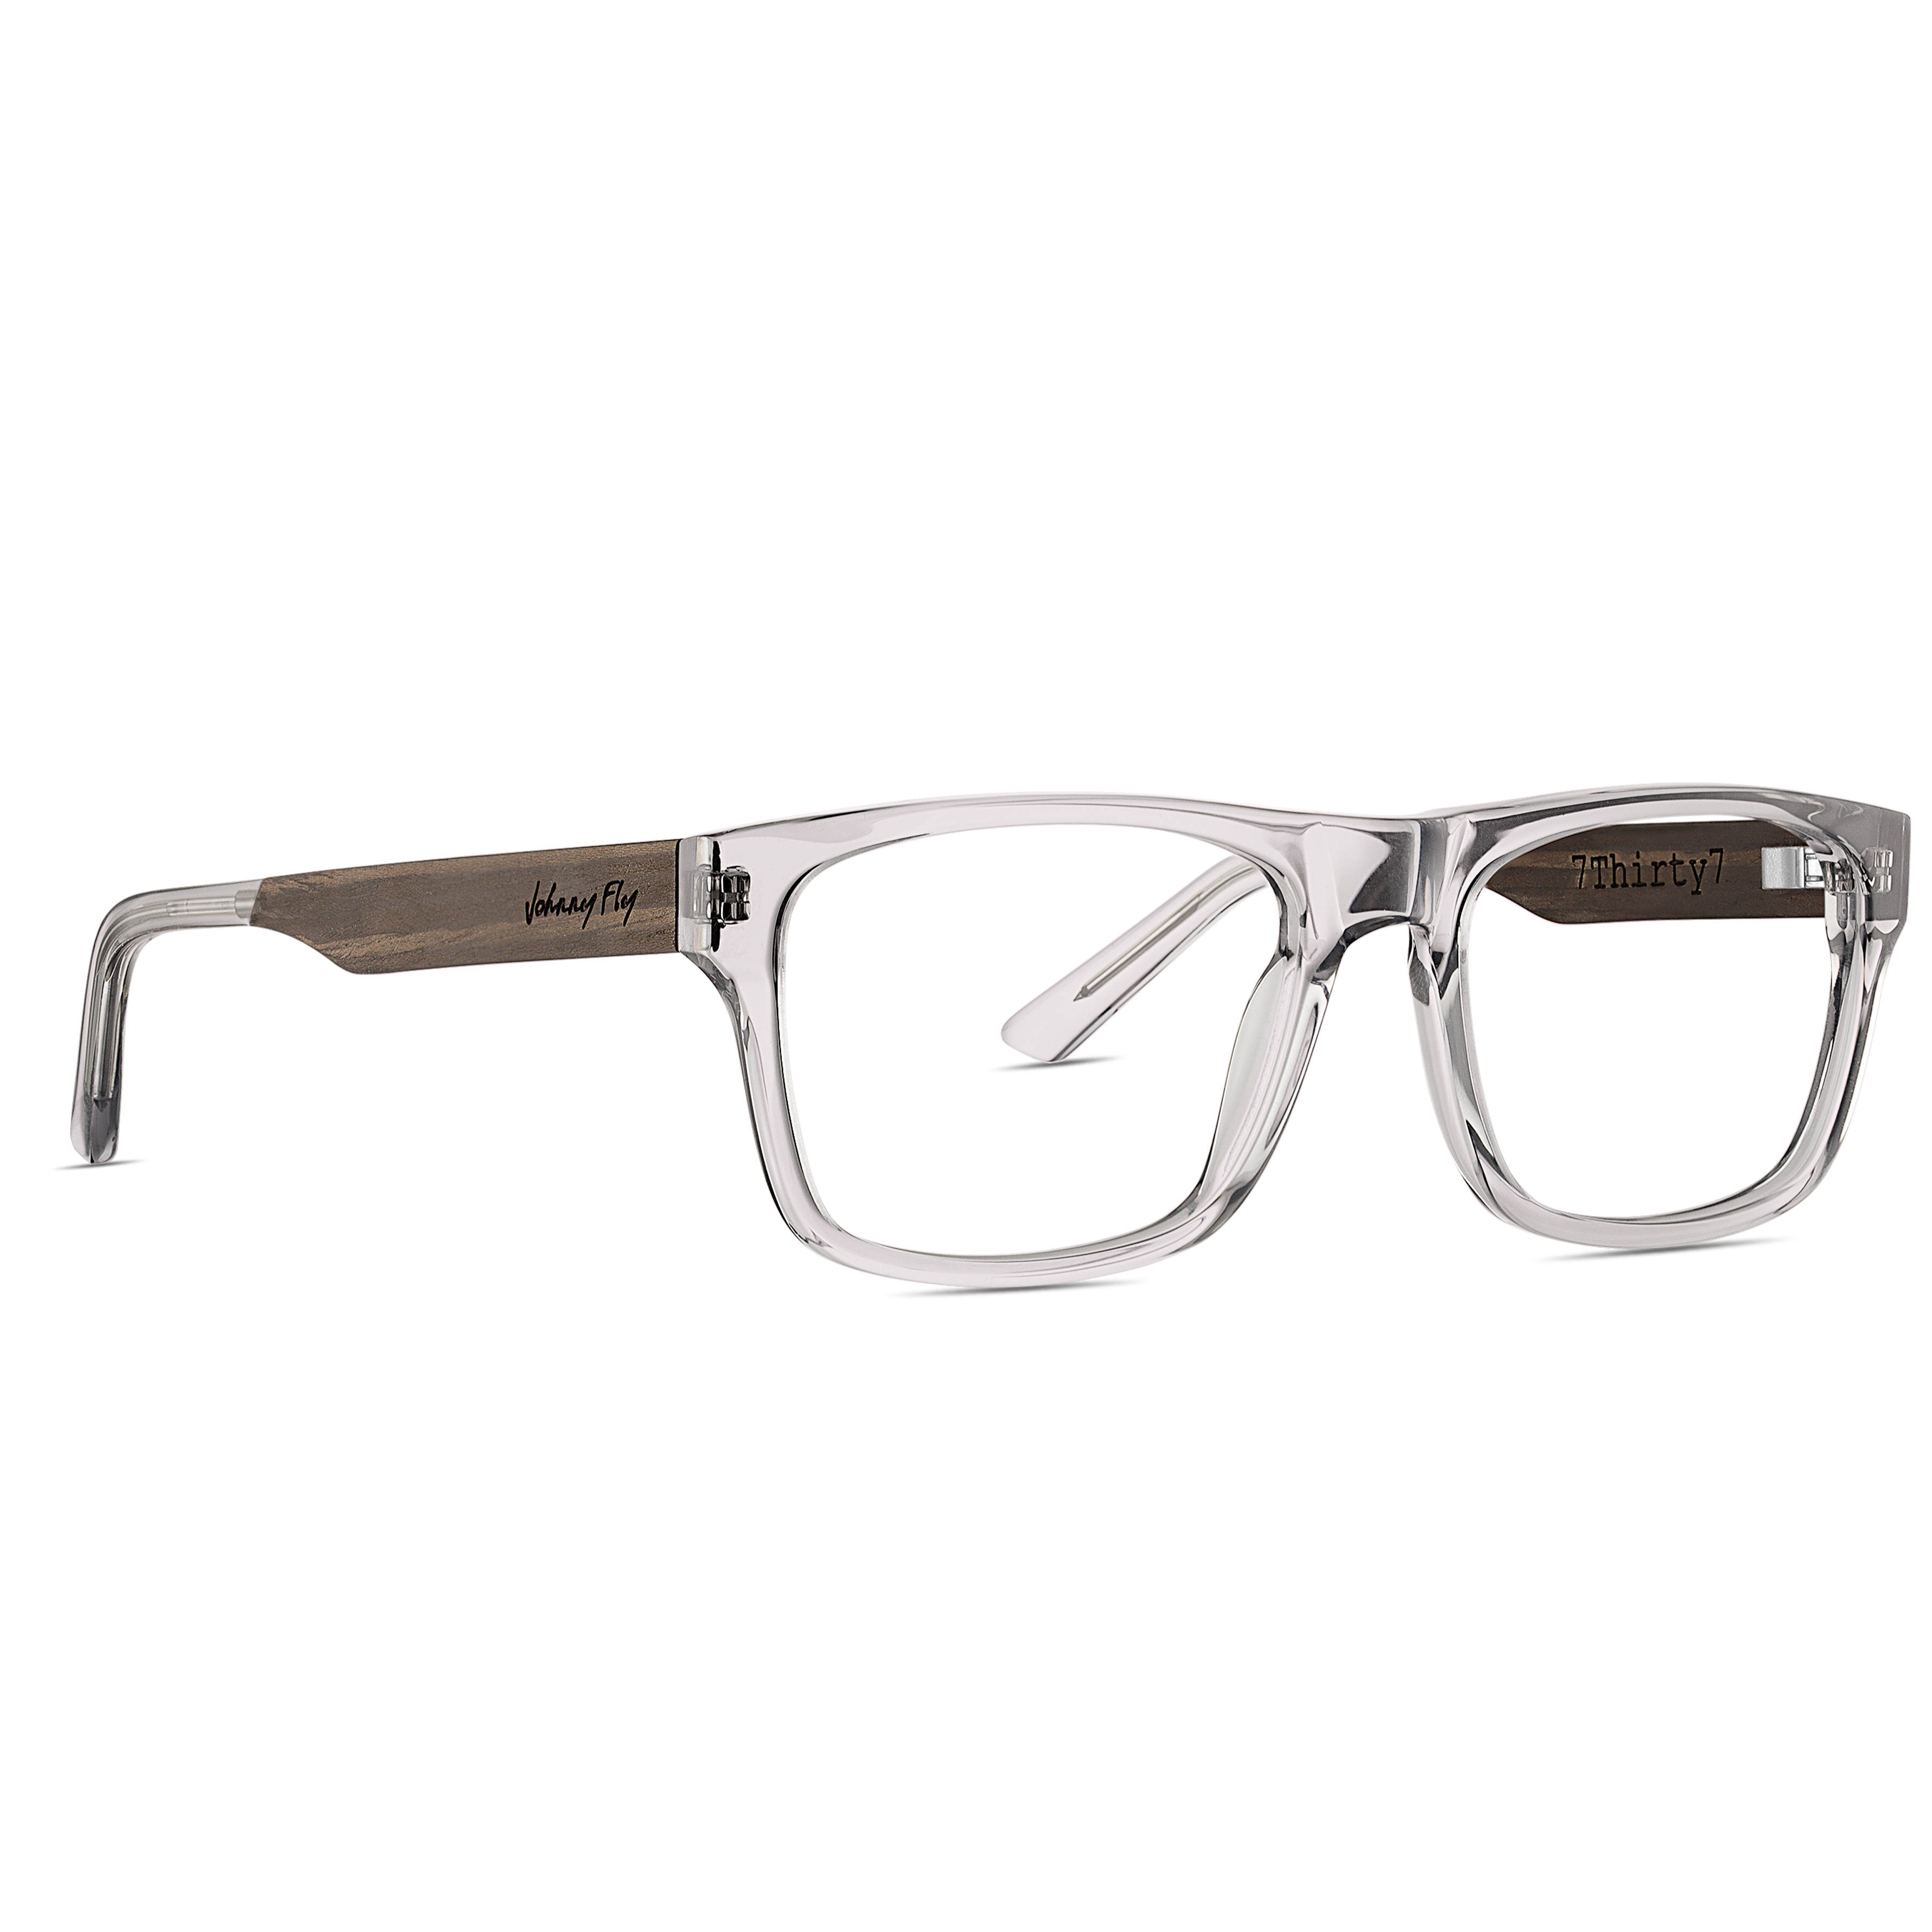 7THIRTY7 - Tinted-Crystal - Eyeglasses Frame - Johnny Fly Eyewear | 